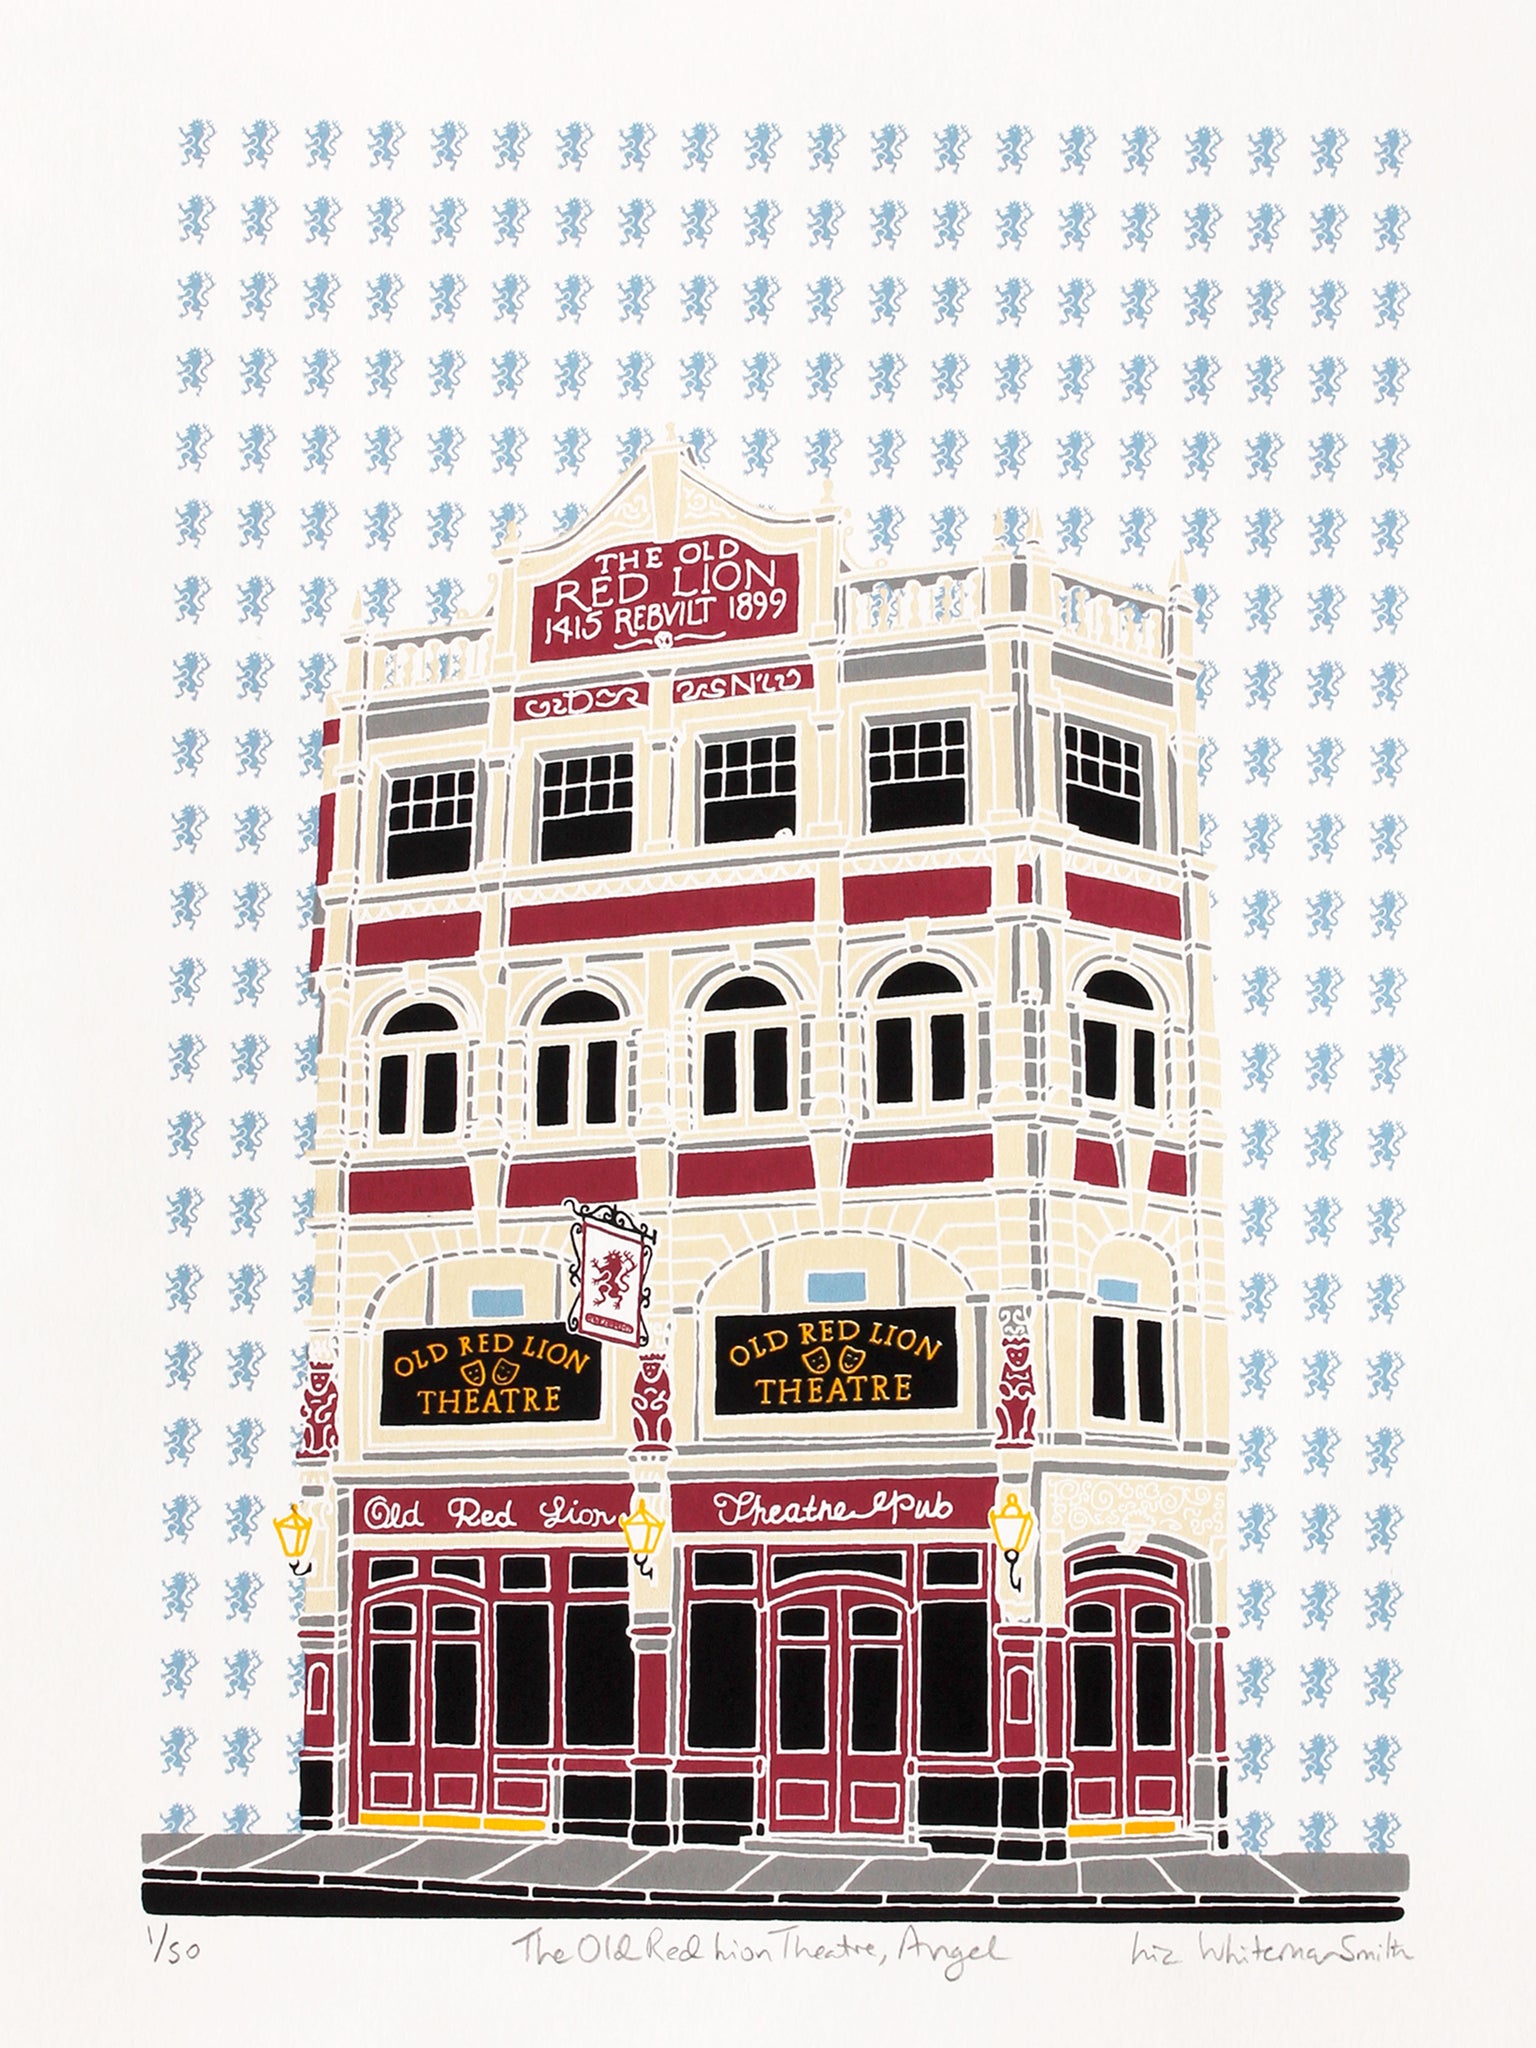 Old Red Lion Theatre pub screen print by Liz Whiteman Smith